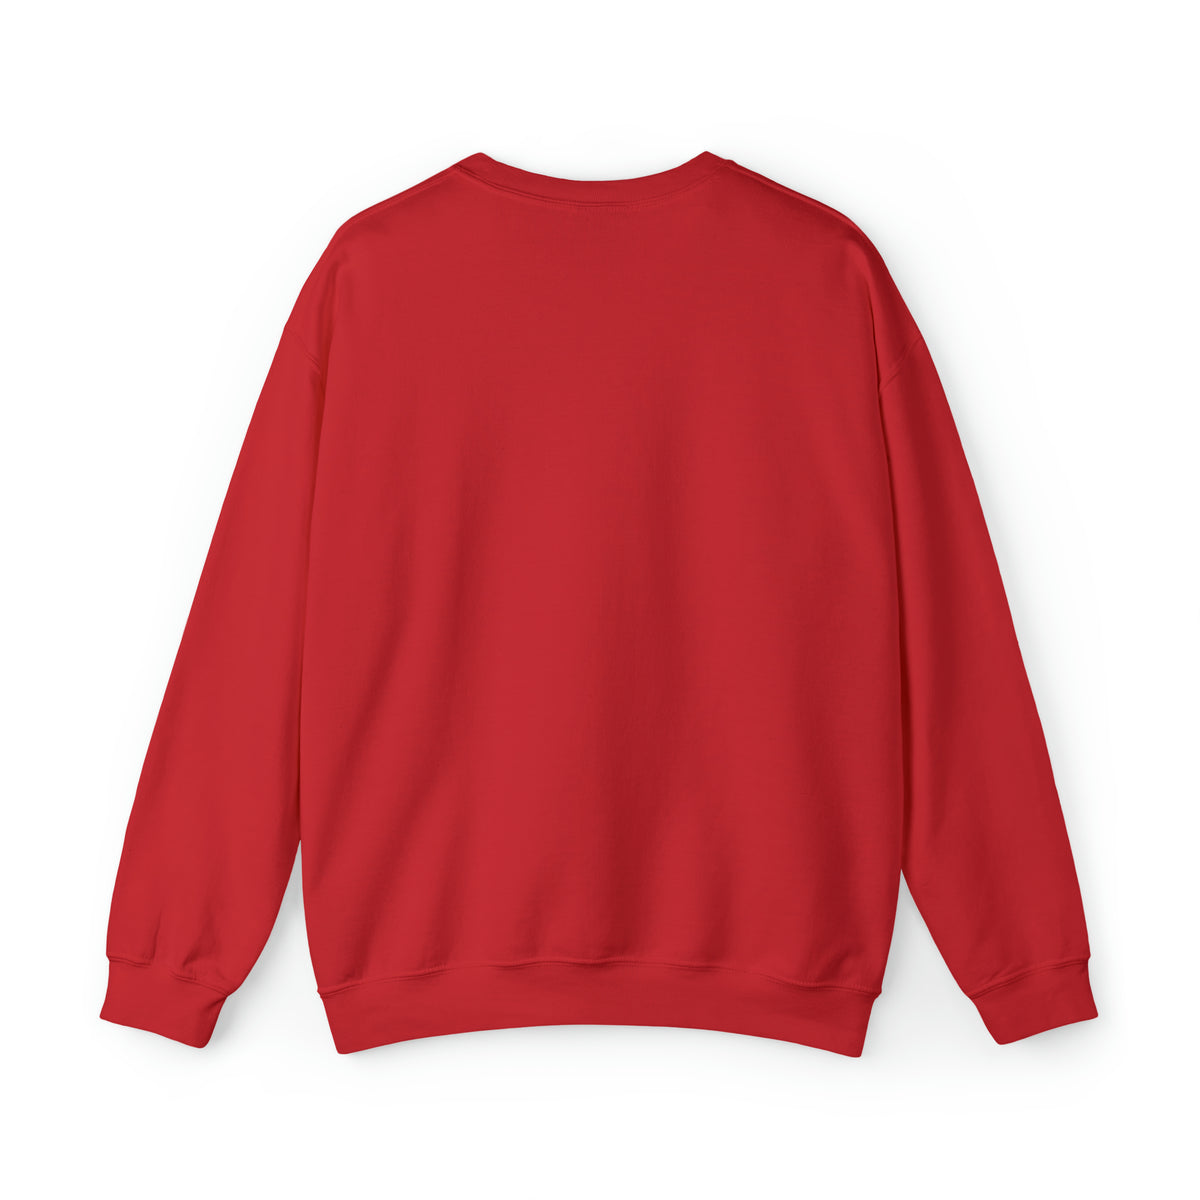 All American Grandma - Unisex Heavy Blend™ Crewneck Sweatshirt